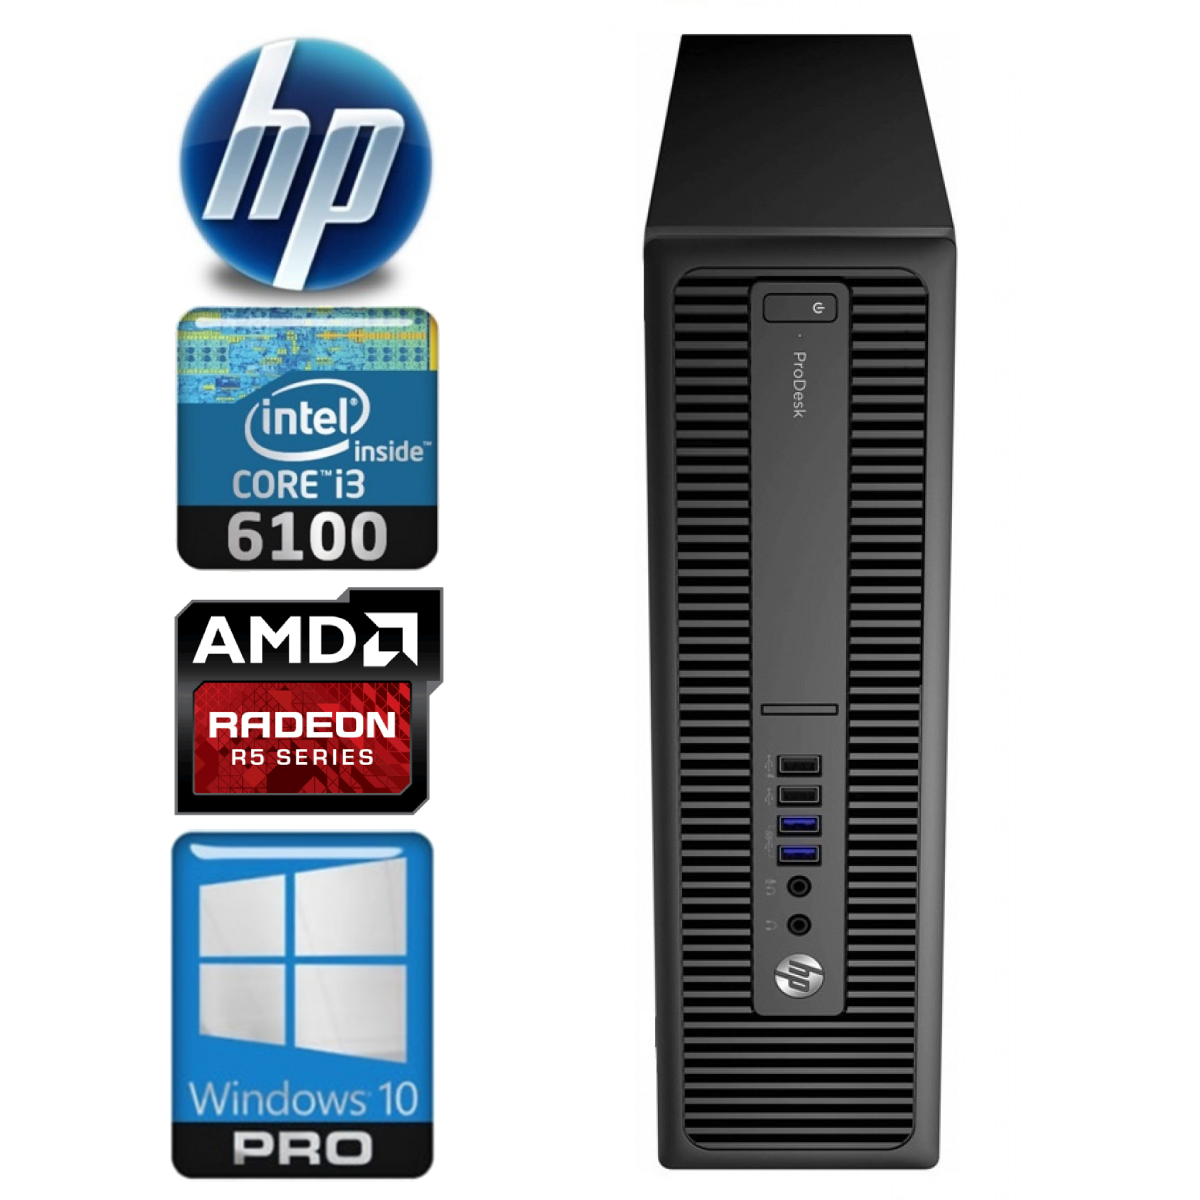 HP 600 G2 SFF i3-6100 8GB 256SSD R5-340 2GB WIN10Pro RW35763 (EAN411535763)